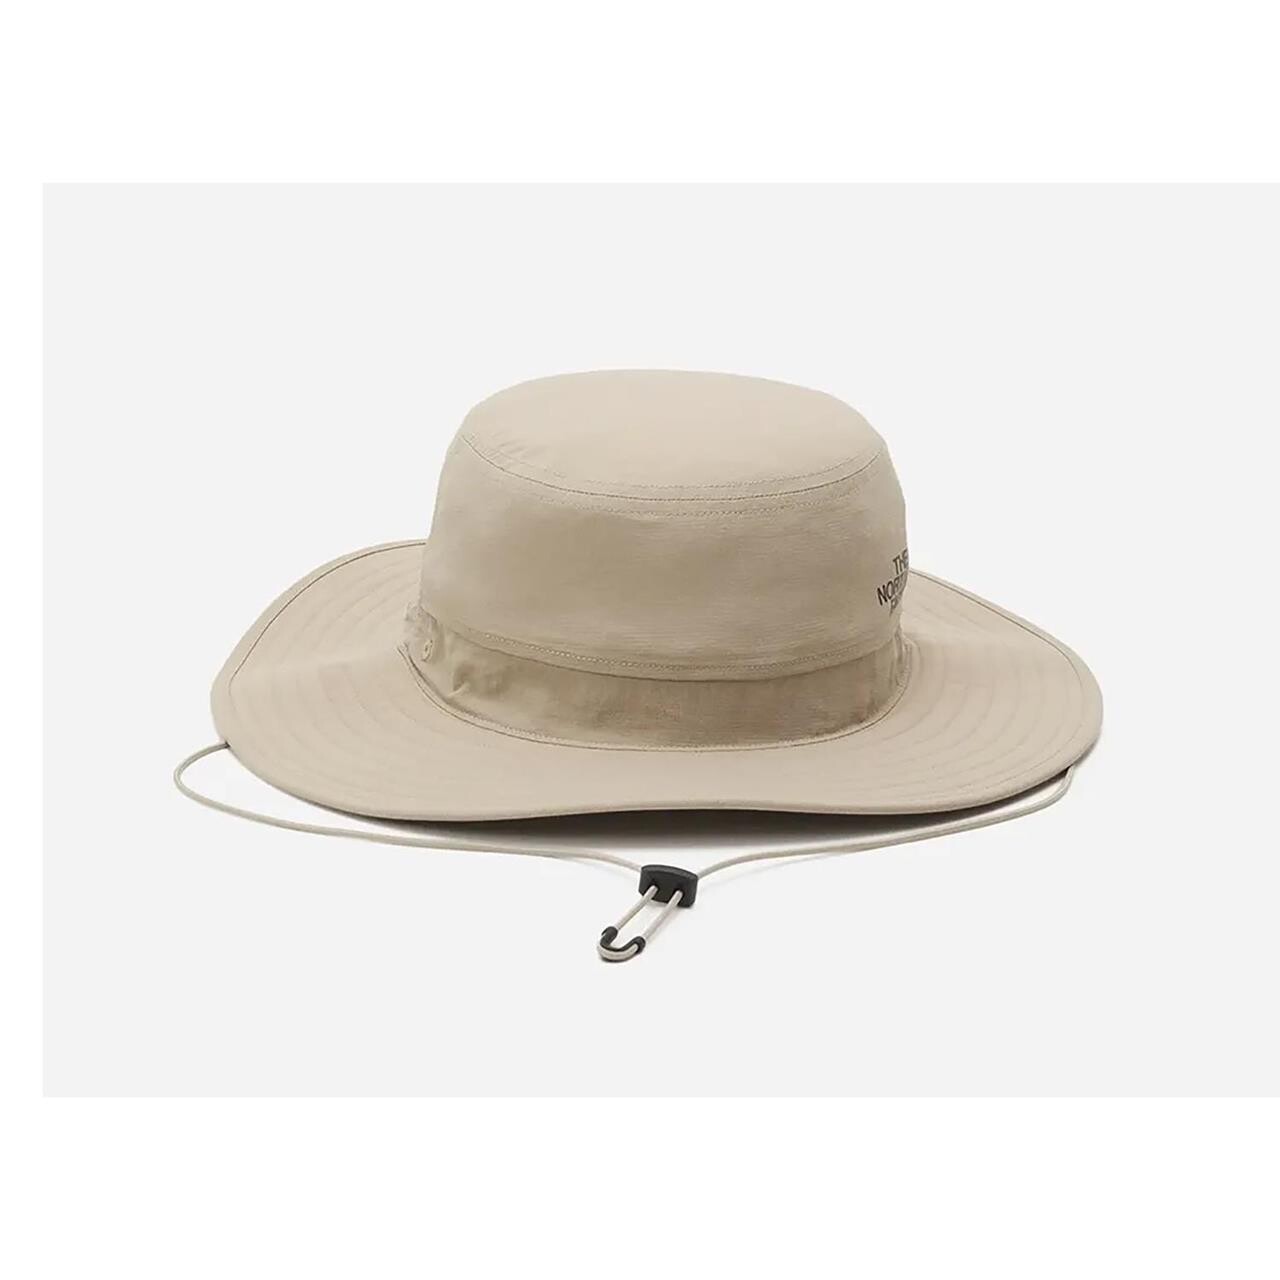 The North Face Horizon Breeze Brimmer Hat (Beige (DUNE BEIGE) Large/x-large)